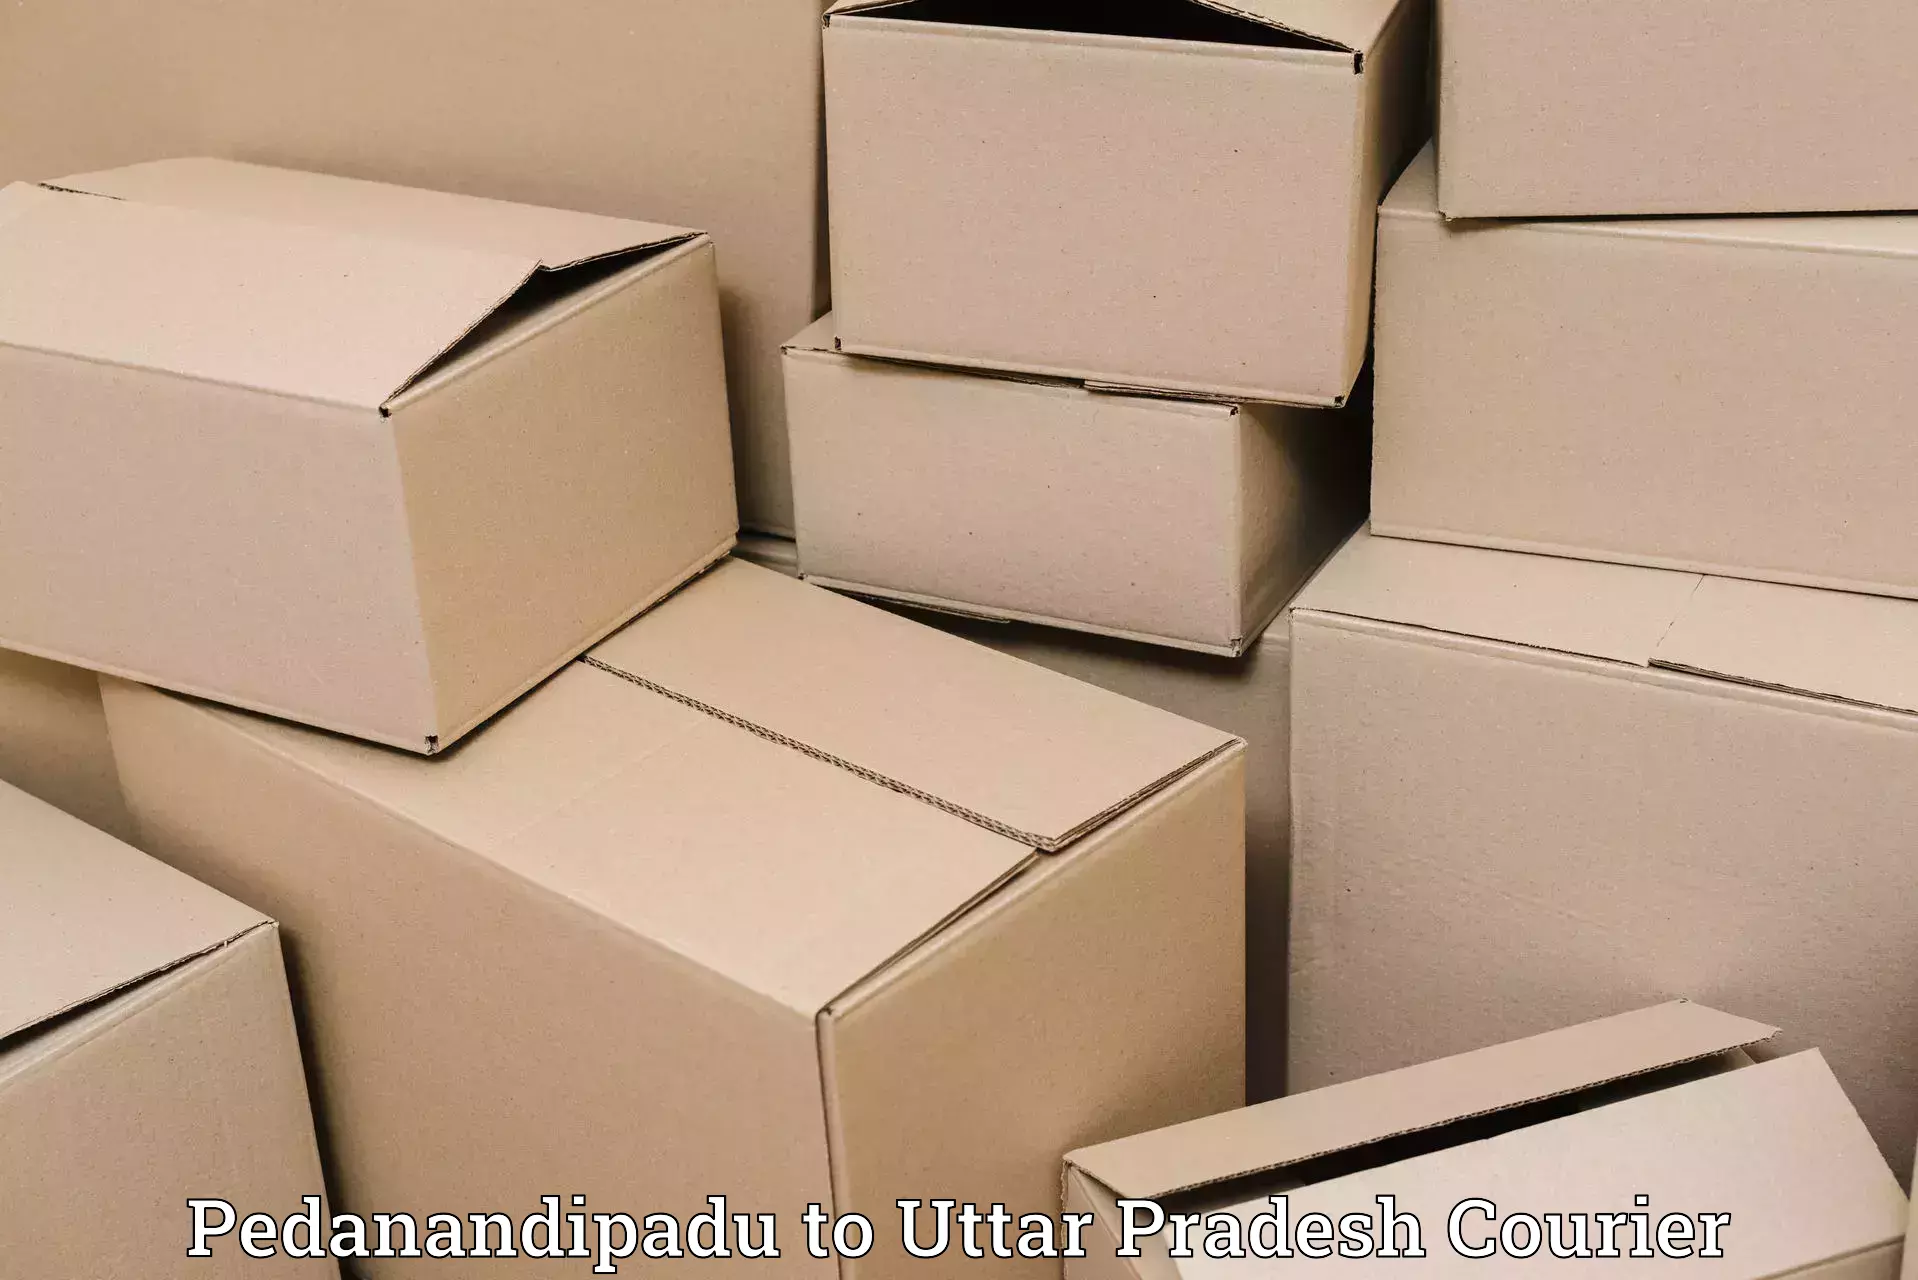 Efficient order fulfillment Pedanandipadu to Kulpahar